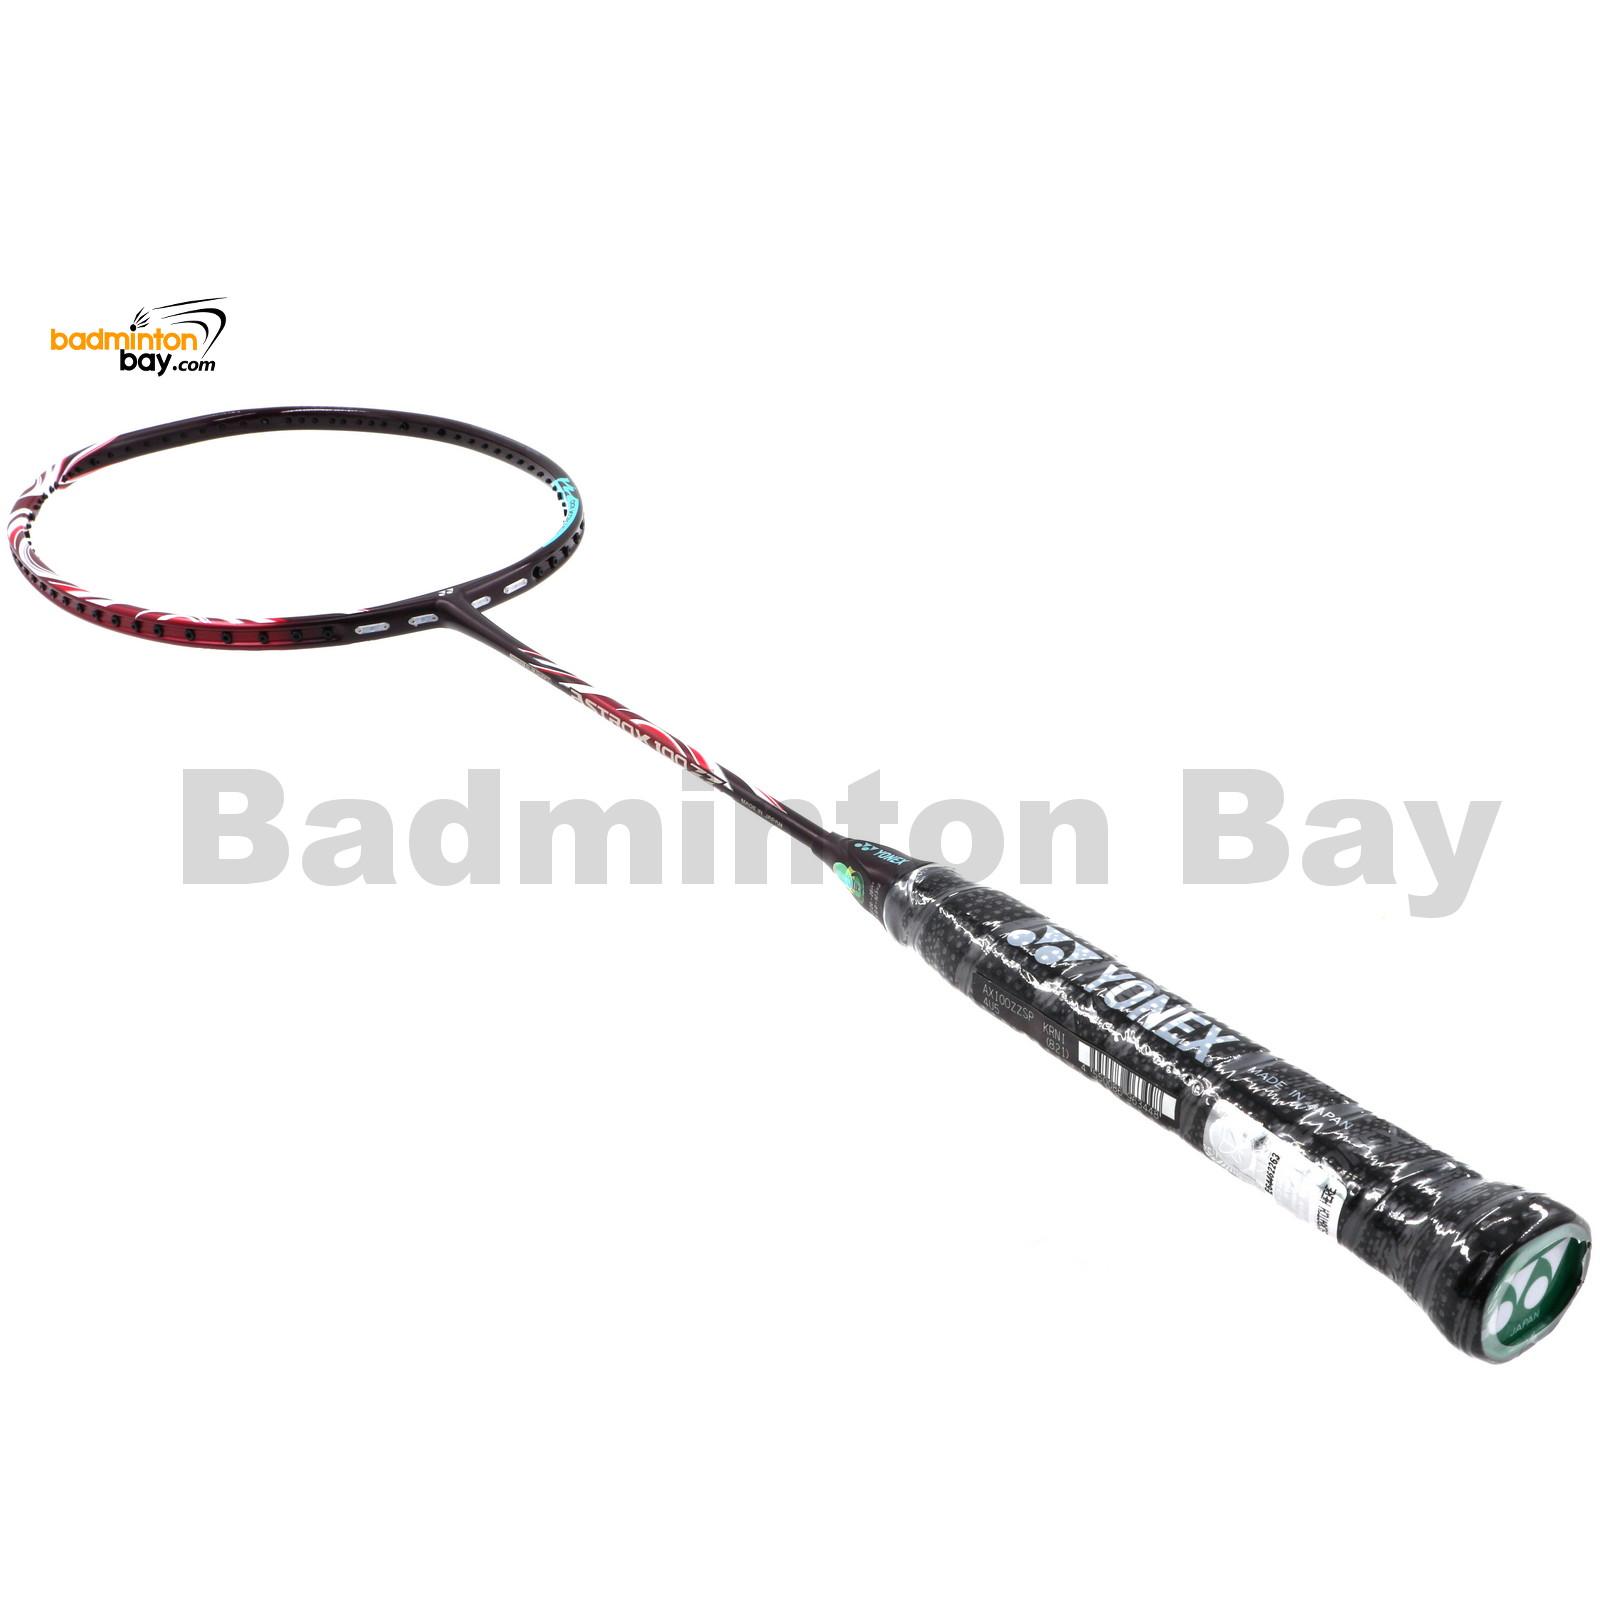 New Yonex Astrox 100ZZ AX100ZZ Badminton Racket 4UG5 Kurenai US model code 